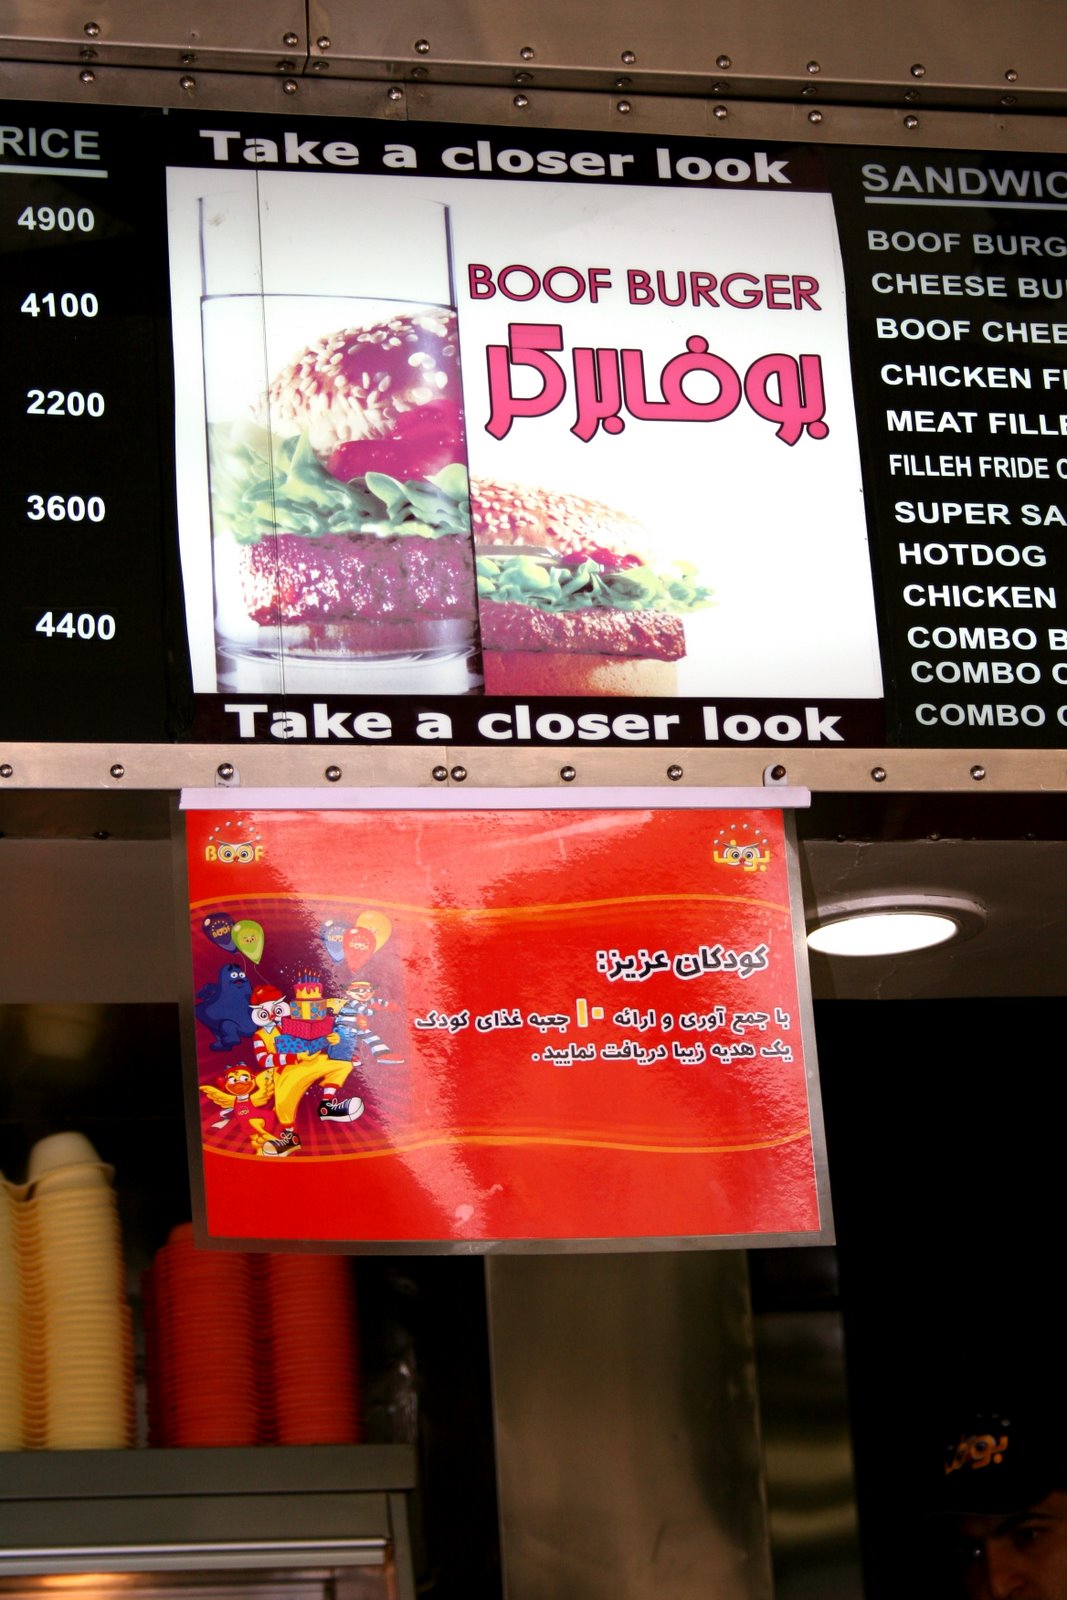 [Boof+Burgers,+Delish.jpg]